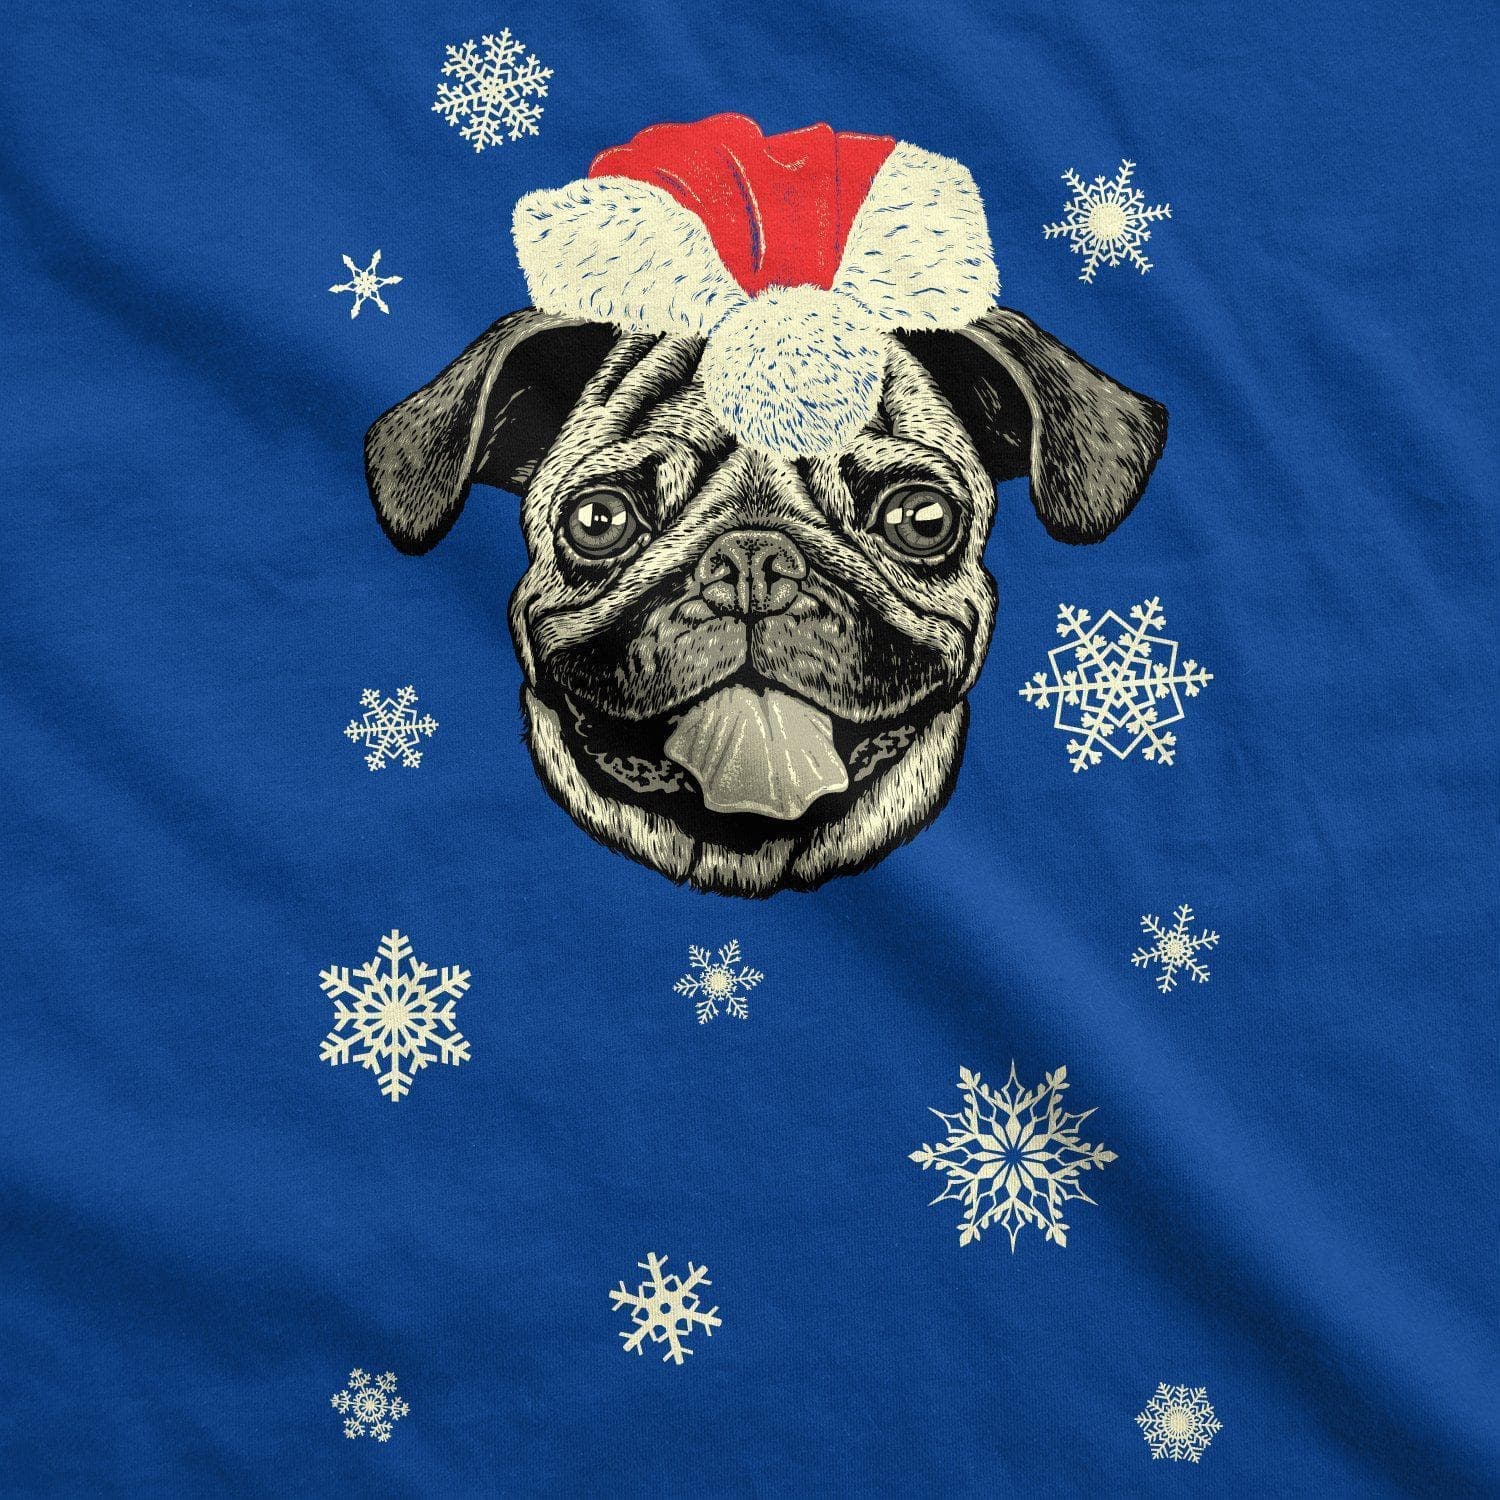 Santa Pug Ugly Christmas Sweater Men's Tshirt - Crazy Dog T-Shirts